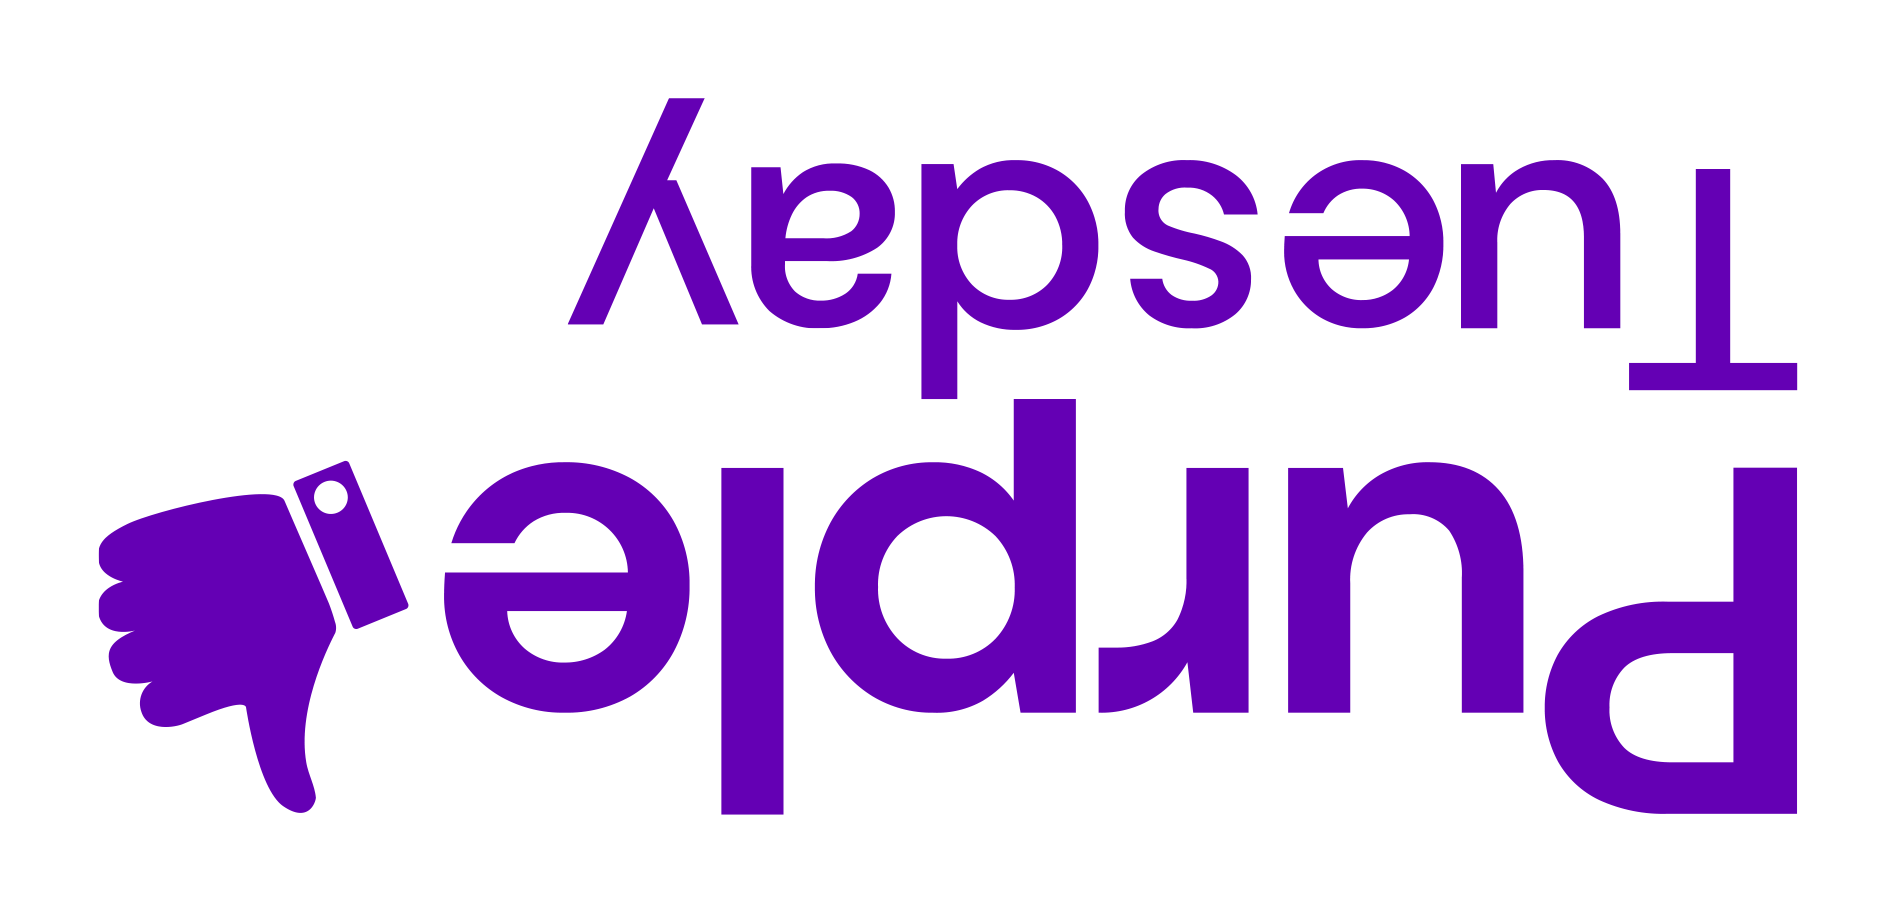 Upside down Purple Tuesday logo